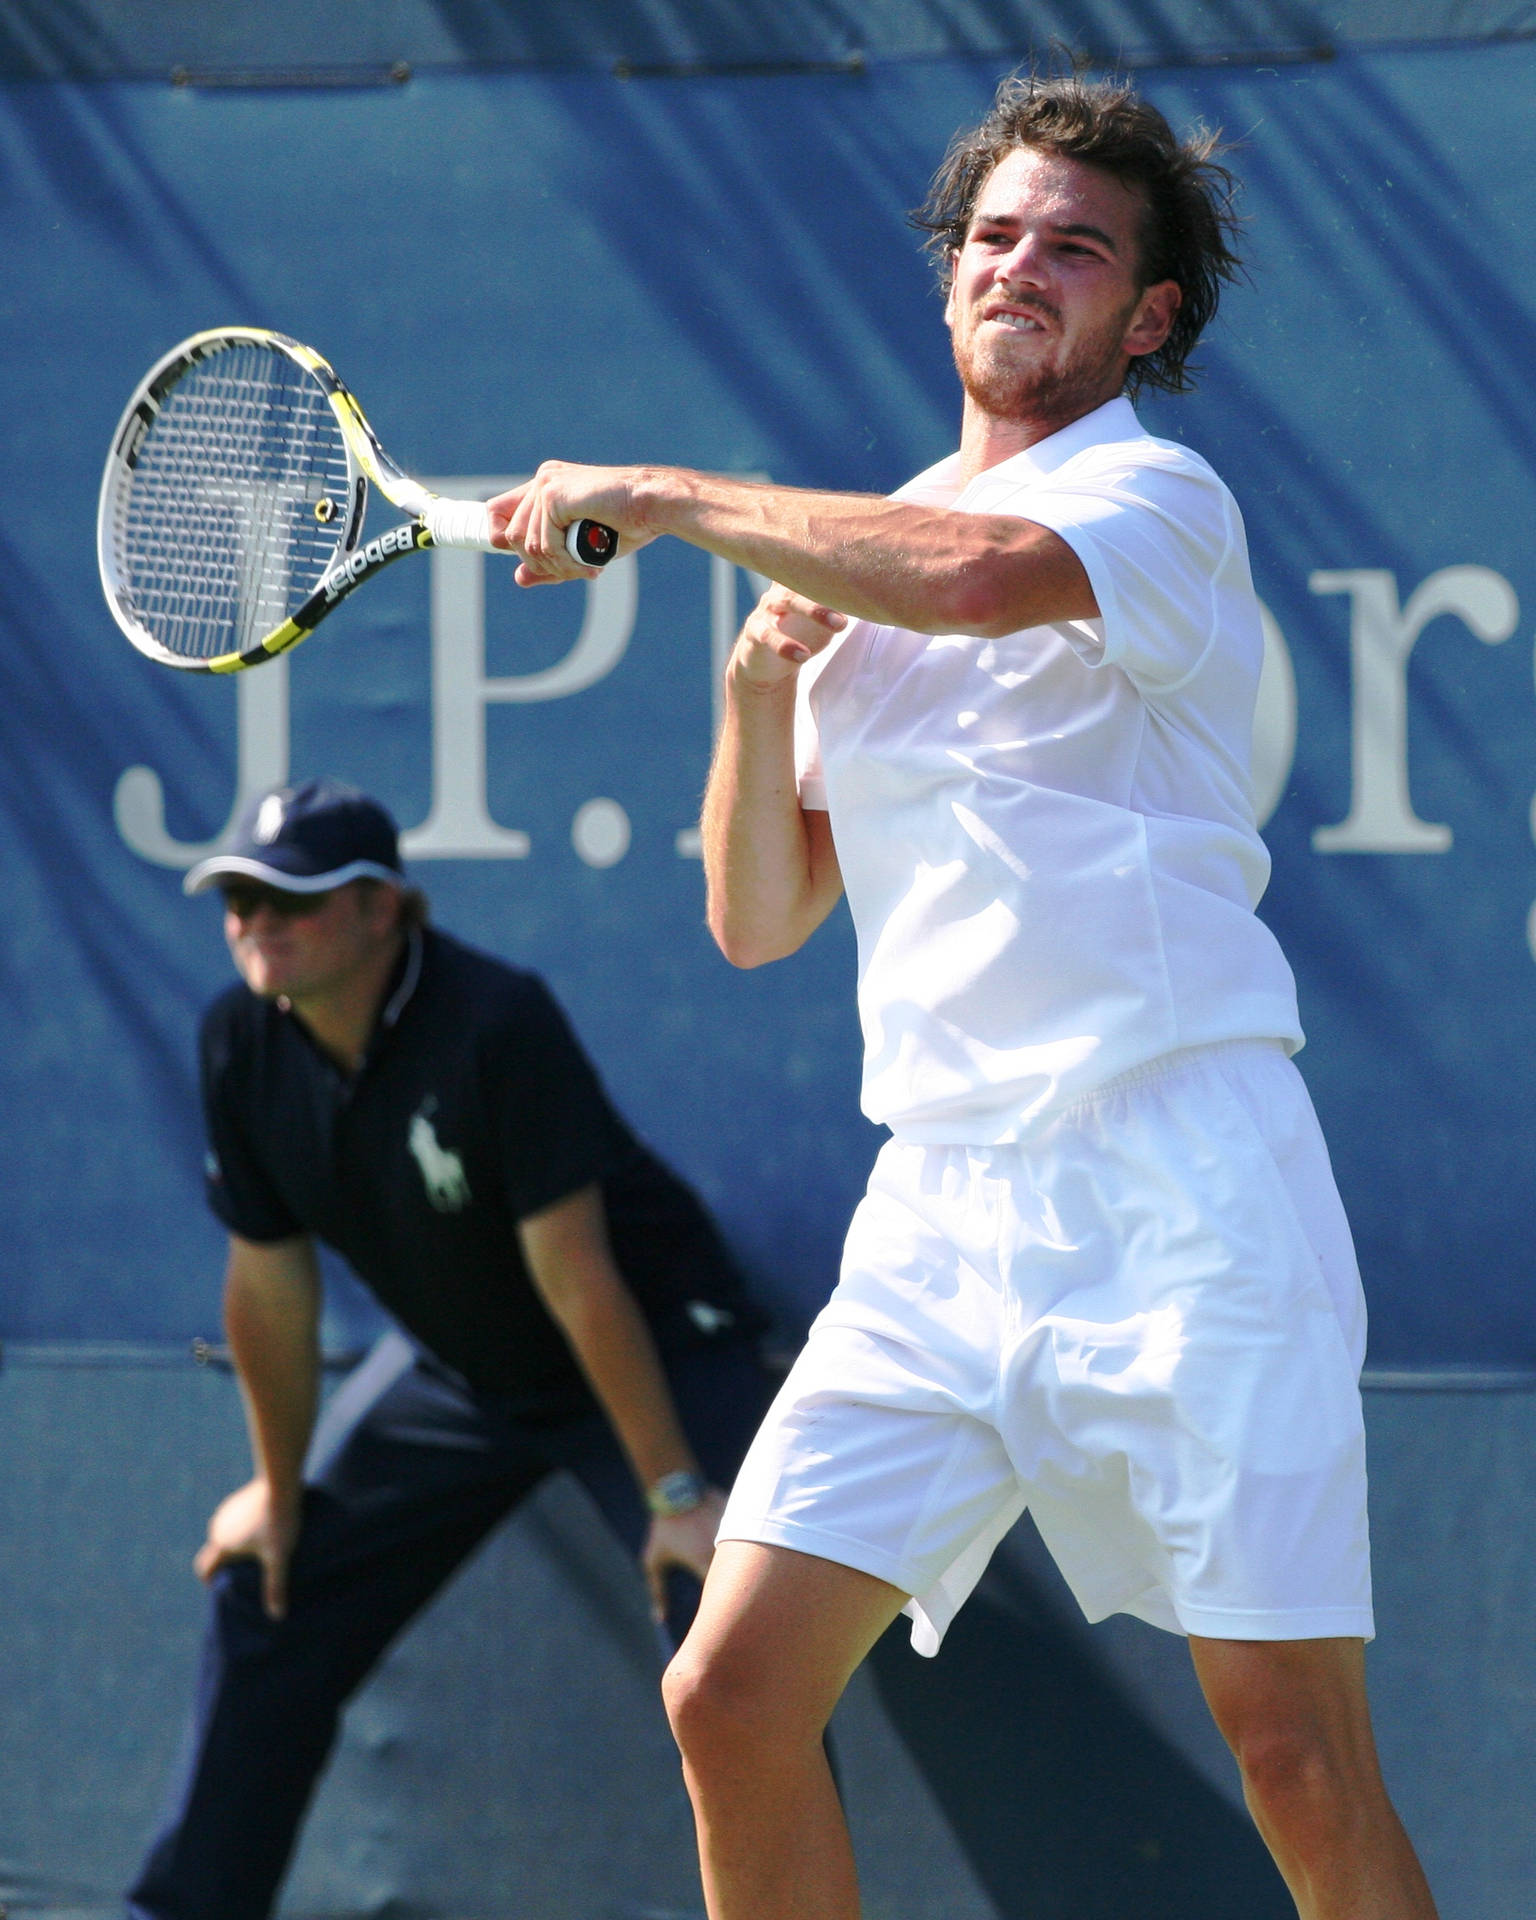 Adrian Mannarino executing a powerful backhand shot in a tennis match Wallpaper